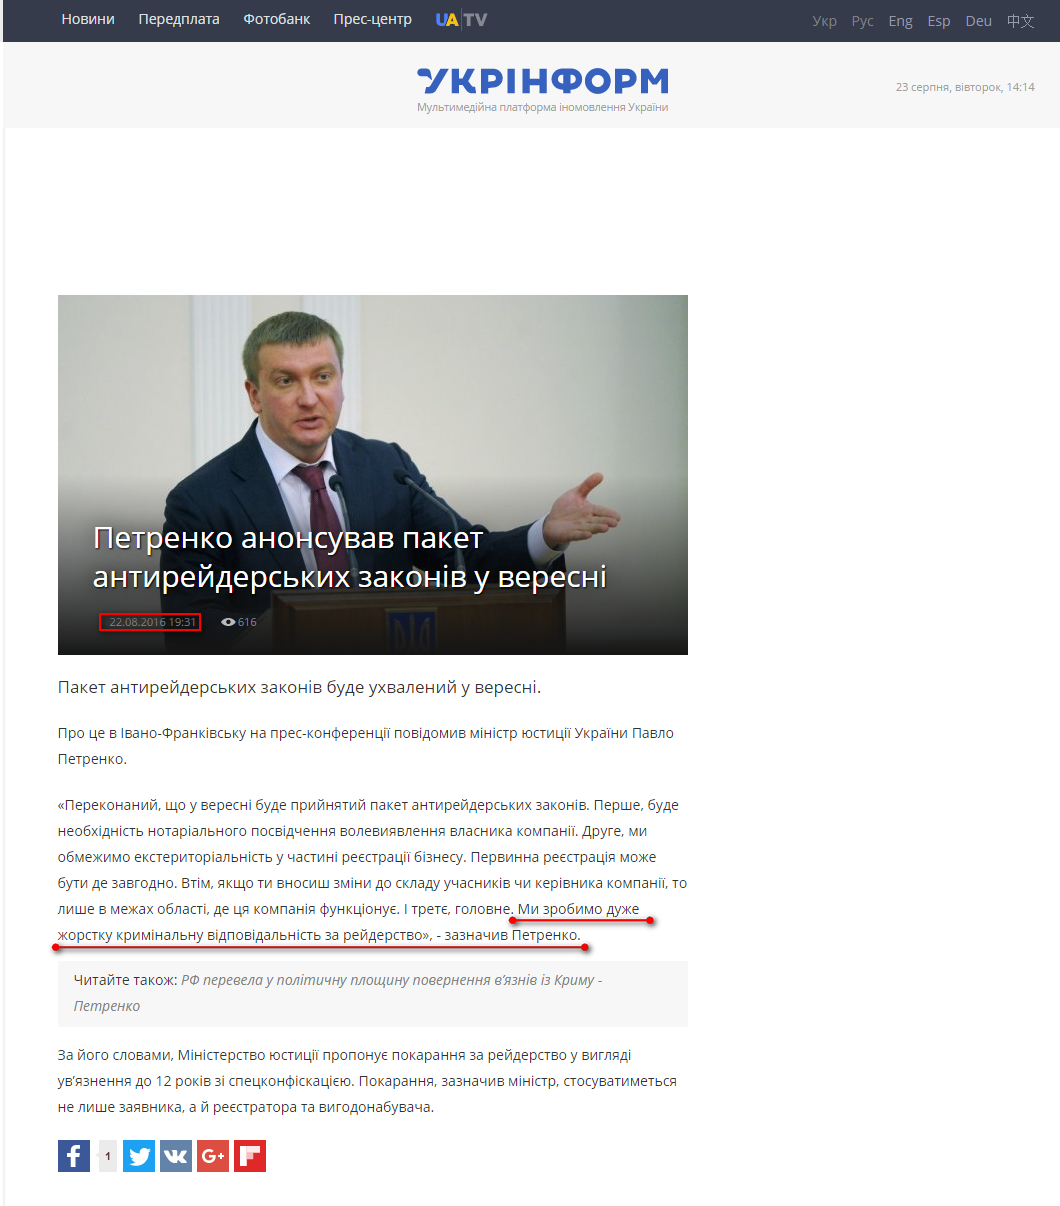 http://www.ukrinform.ua/rubric-economics/2070835-petrenko-anonsuvav-paket-antirejderskih-zakoniv-u-veresni.html